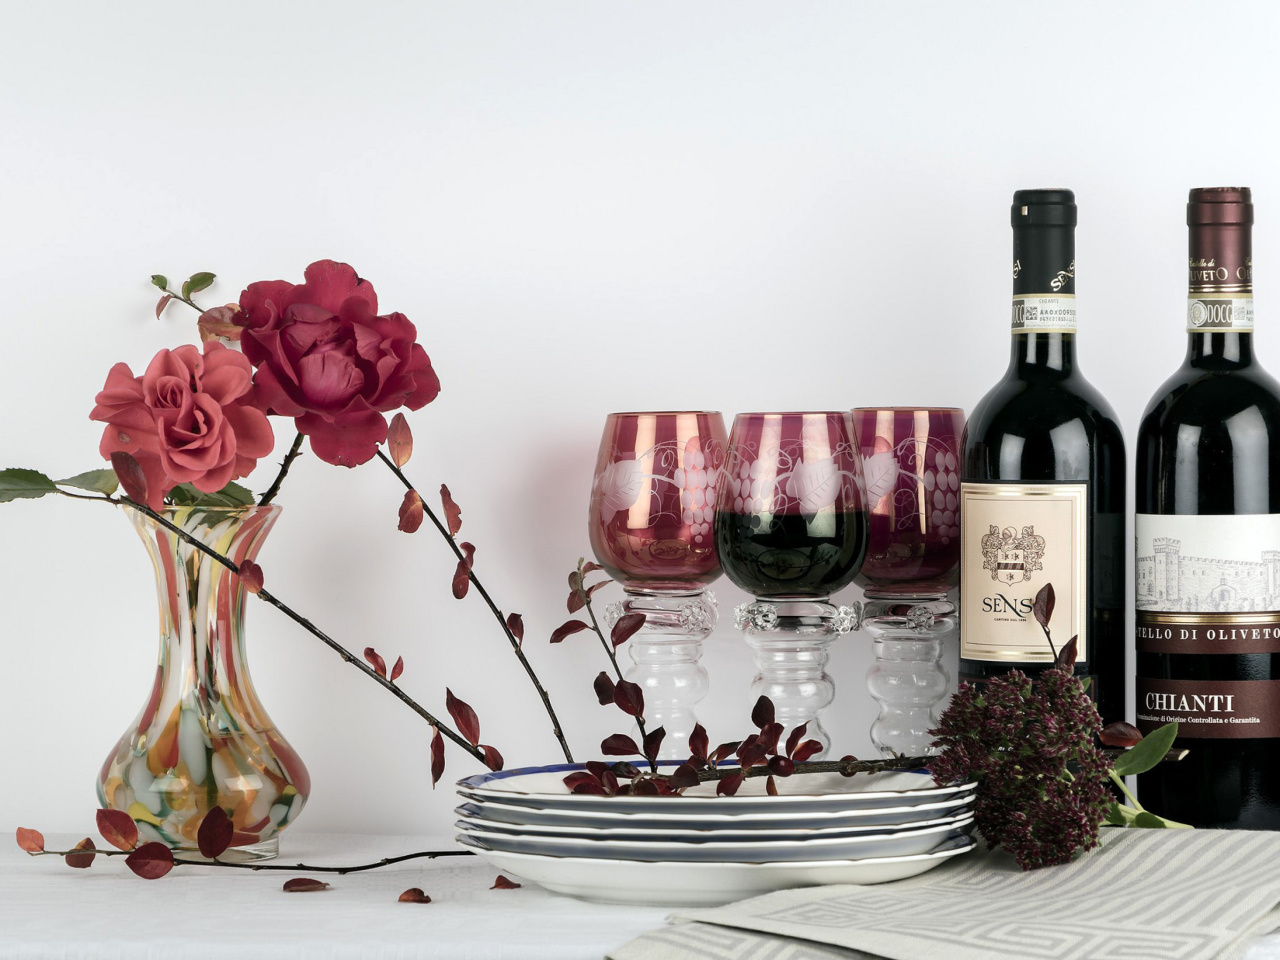 Chianti Wine from Tuscany region wallpaper 1280x960